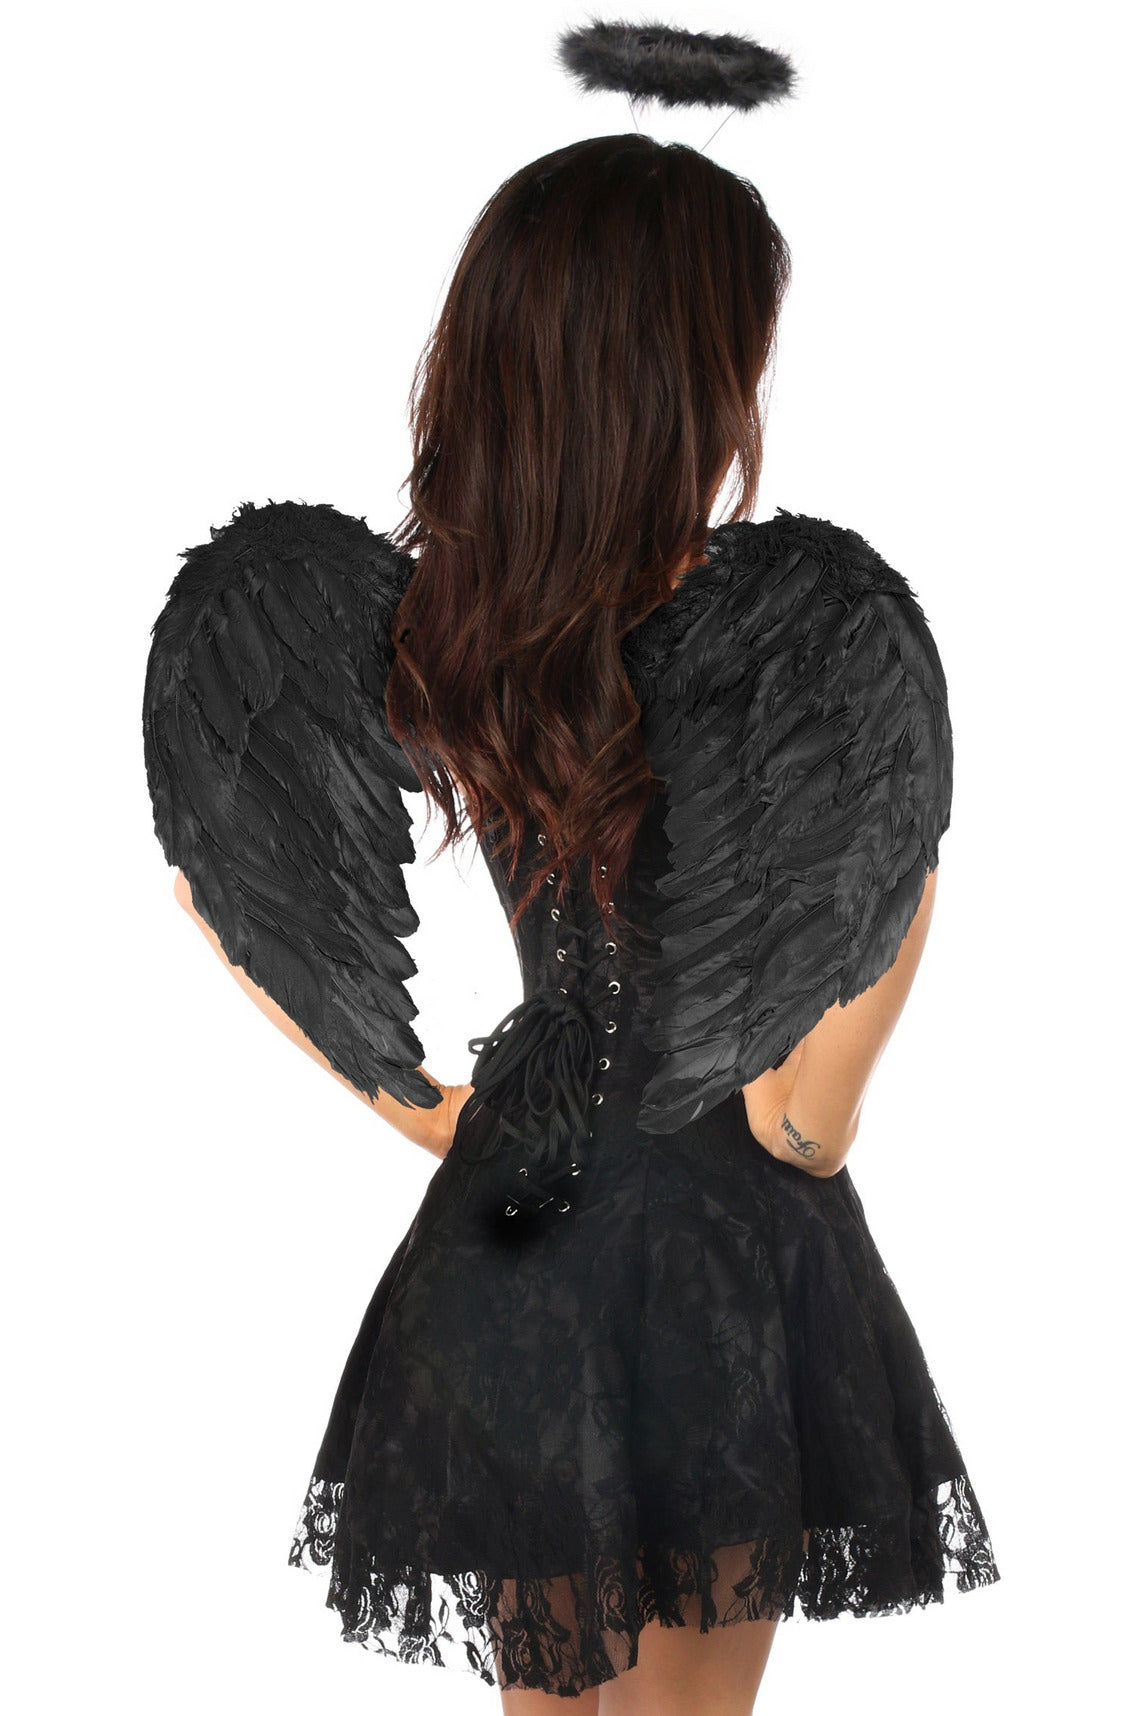 Lavish 3 PC Dark Angel Corset Dress Costume-Daisy Corsets